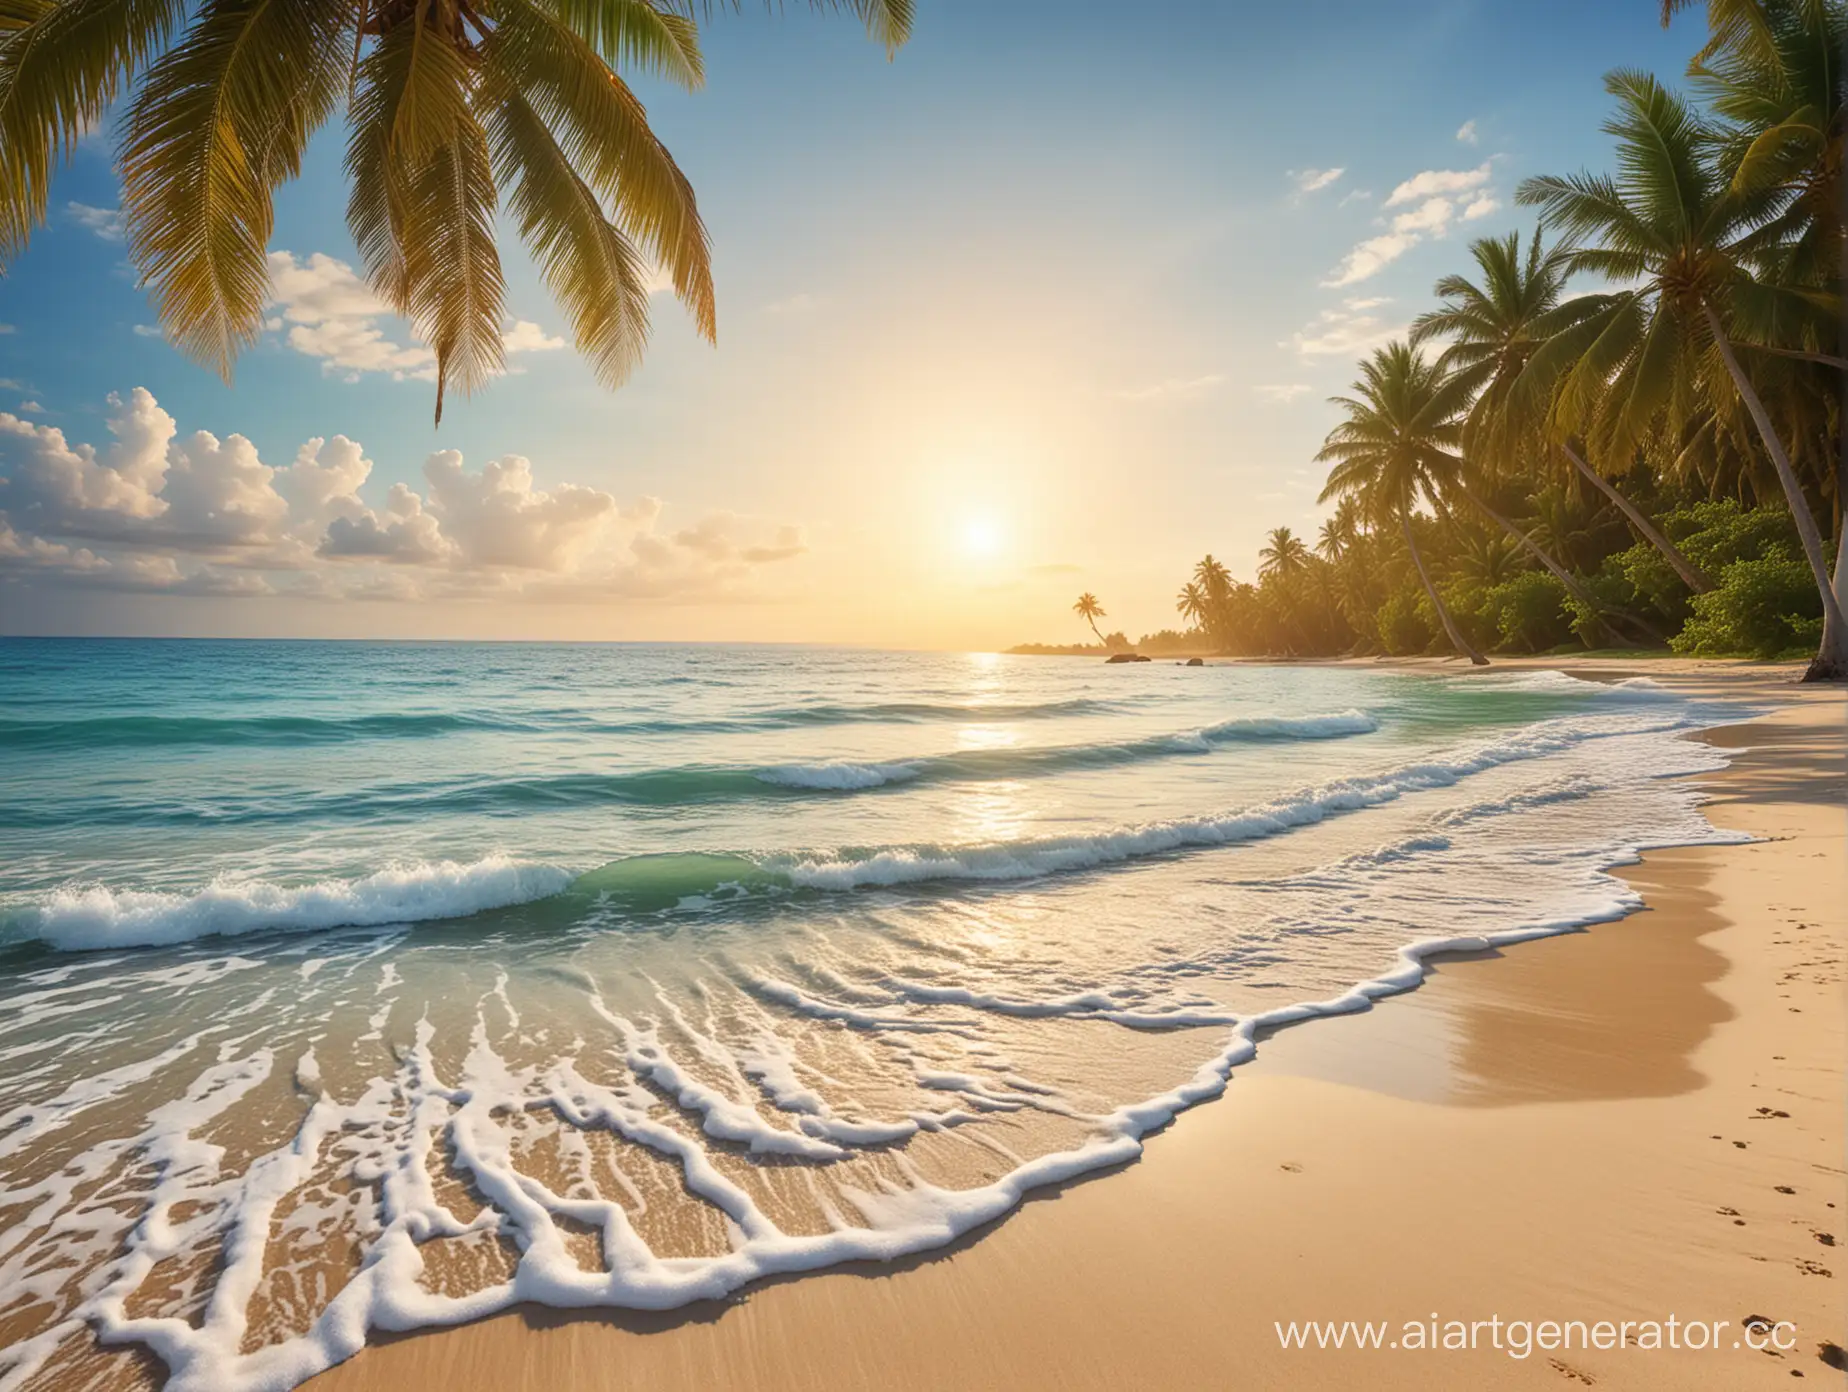 Sunny-Summer-Beach-with-Families-Enjoying-Seaside-Activities